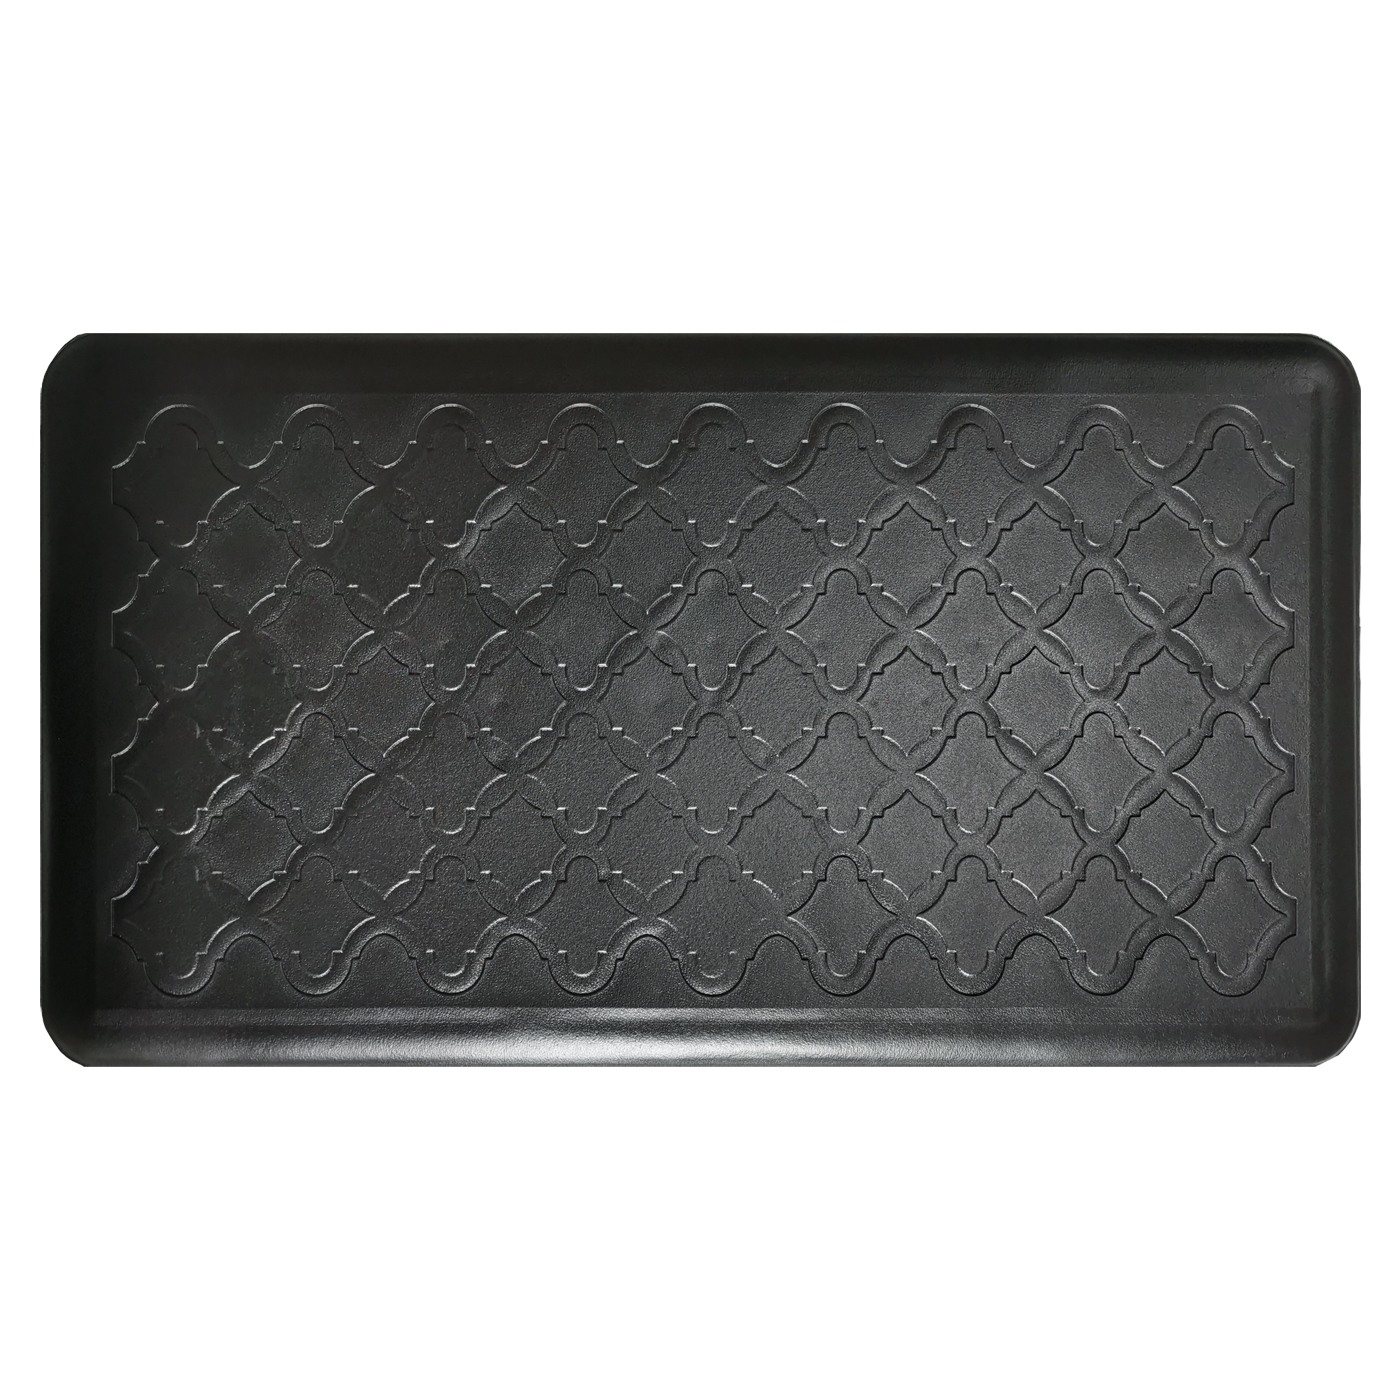 Art3d Anti Fatigue Mat - 12 inch Cushioned Kitchen Mat - Non Slip Foam Comfort Cushion for Standing Desk, Office or Garage Floor 173x28, Black